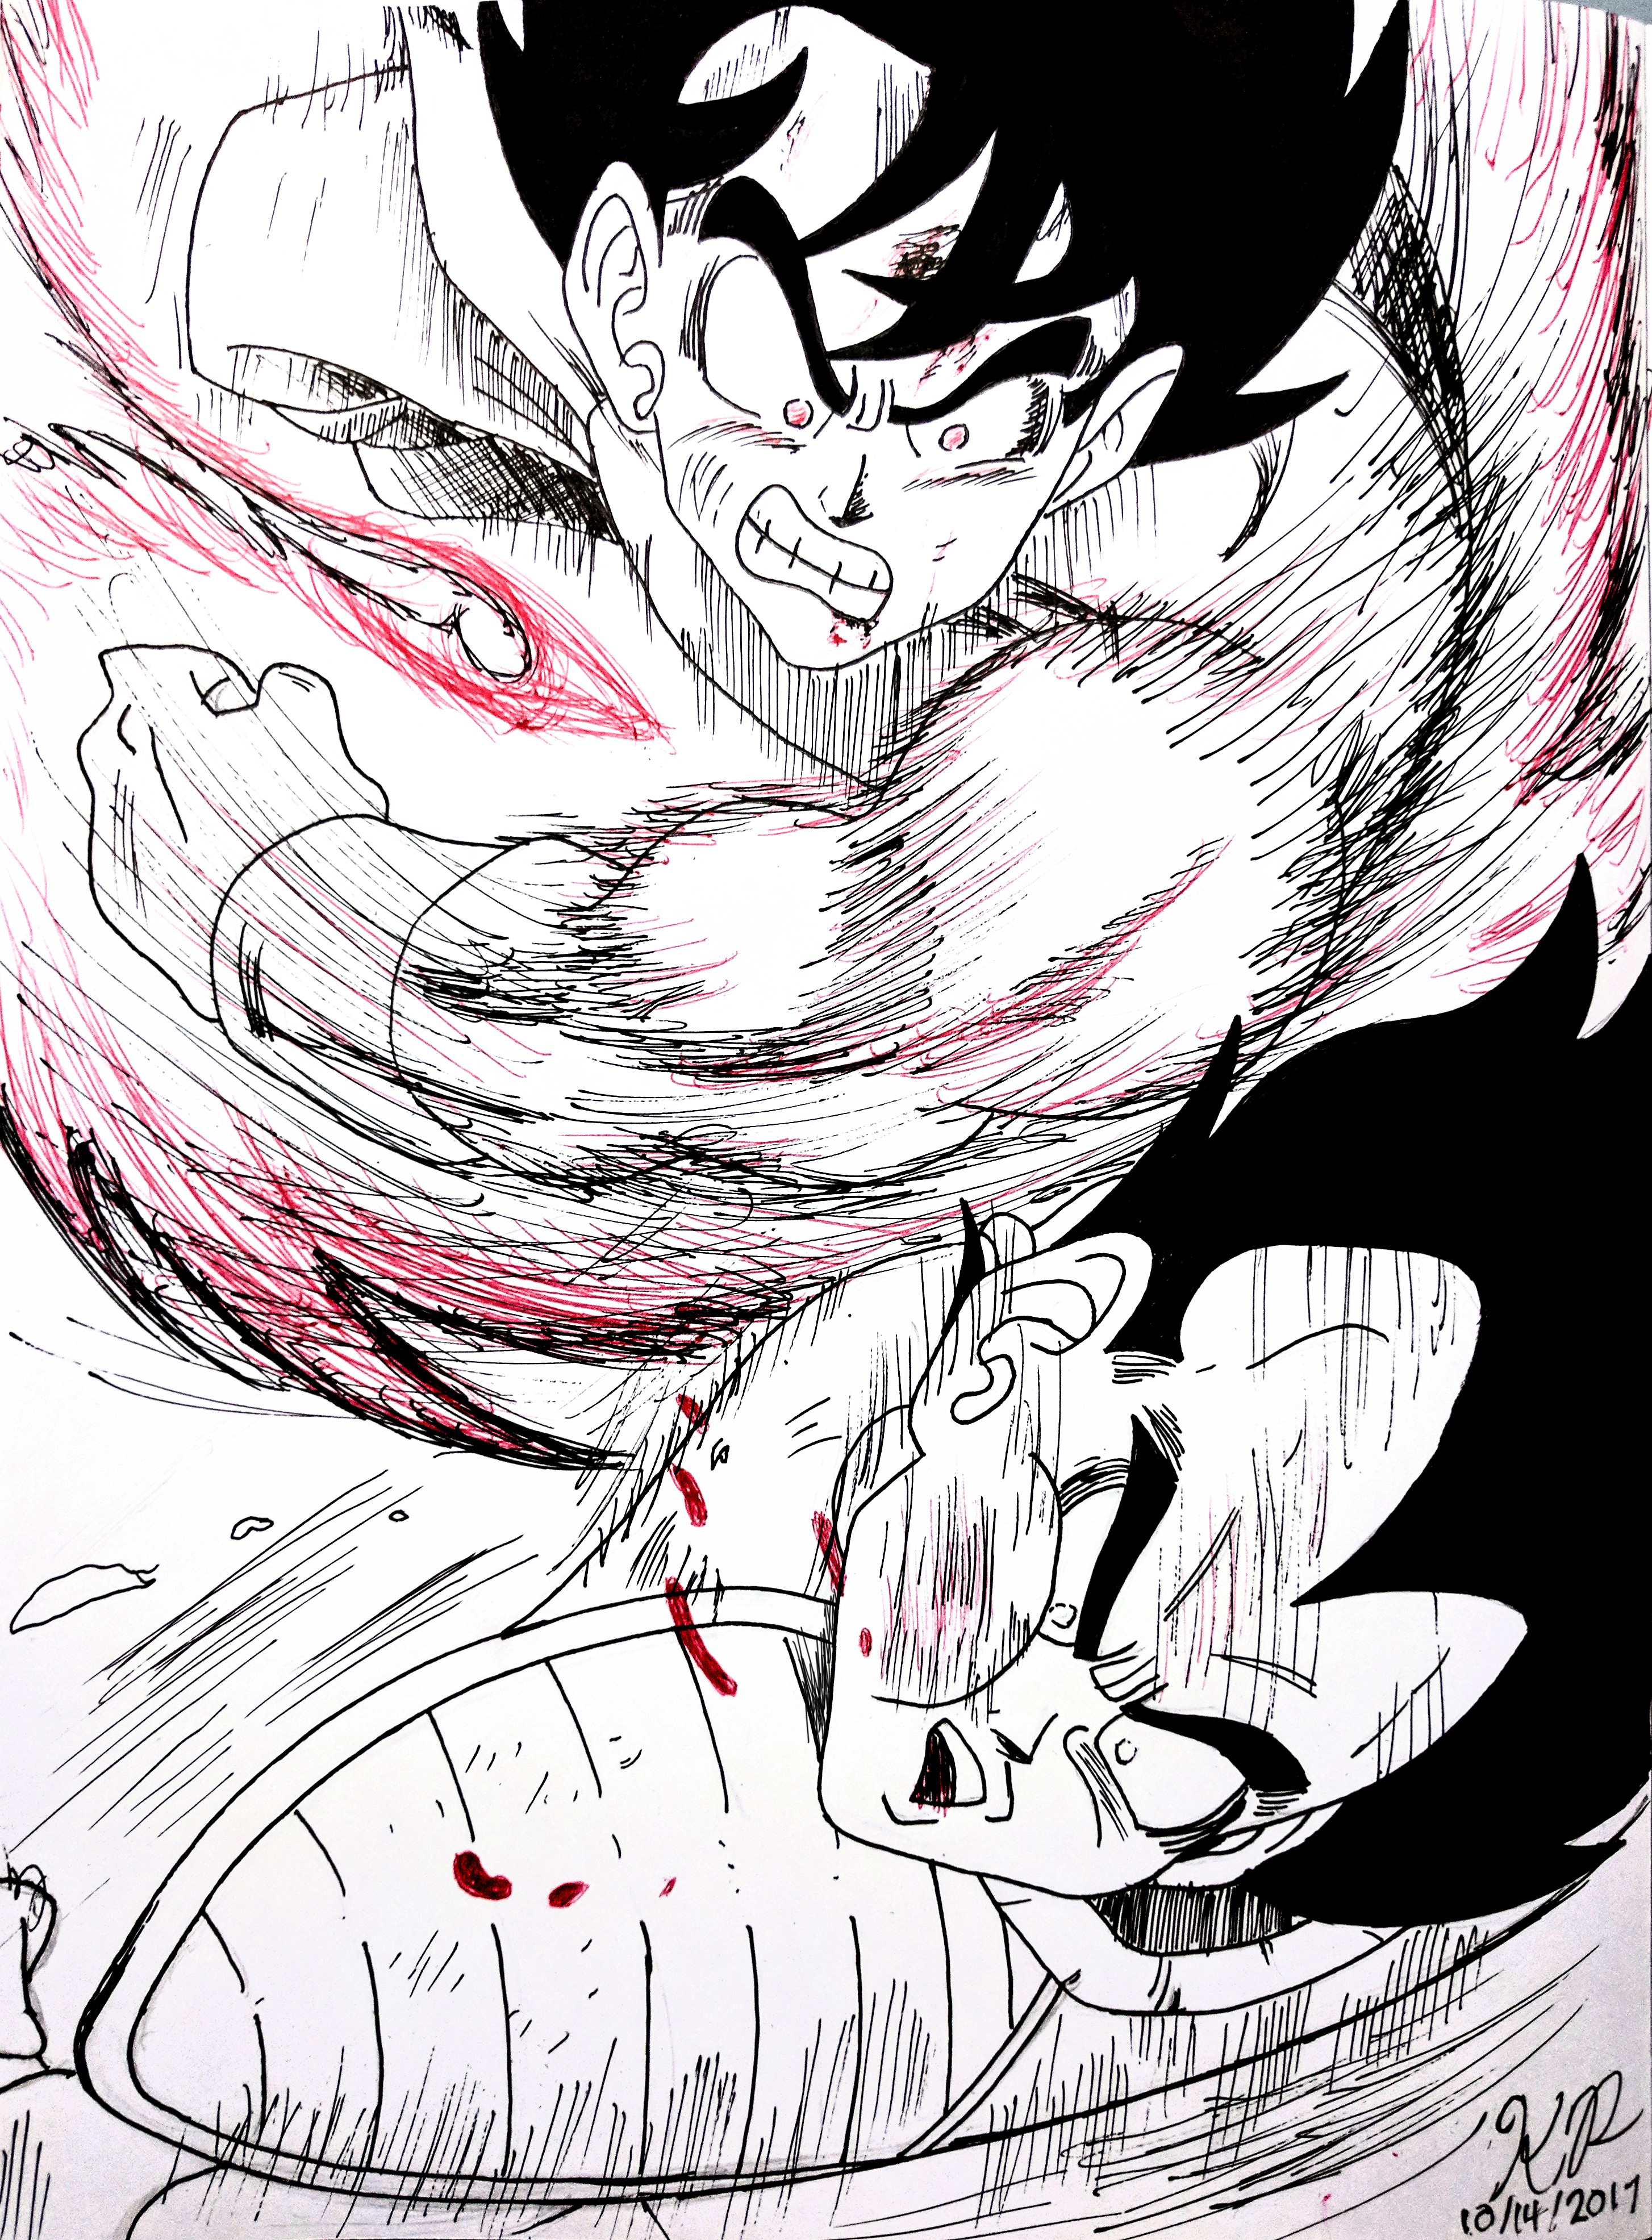 Kaioken Goku vs Vegeta by Butterlord120 on DeviantArt